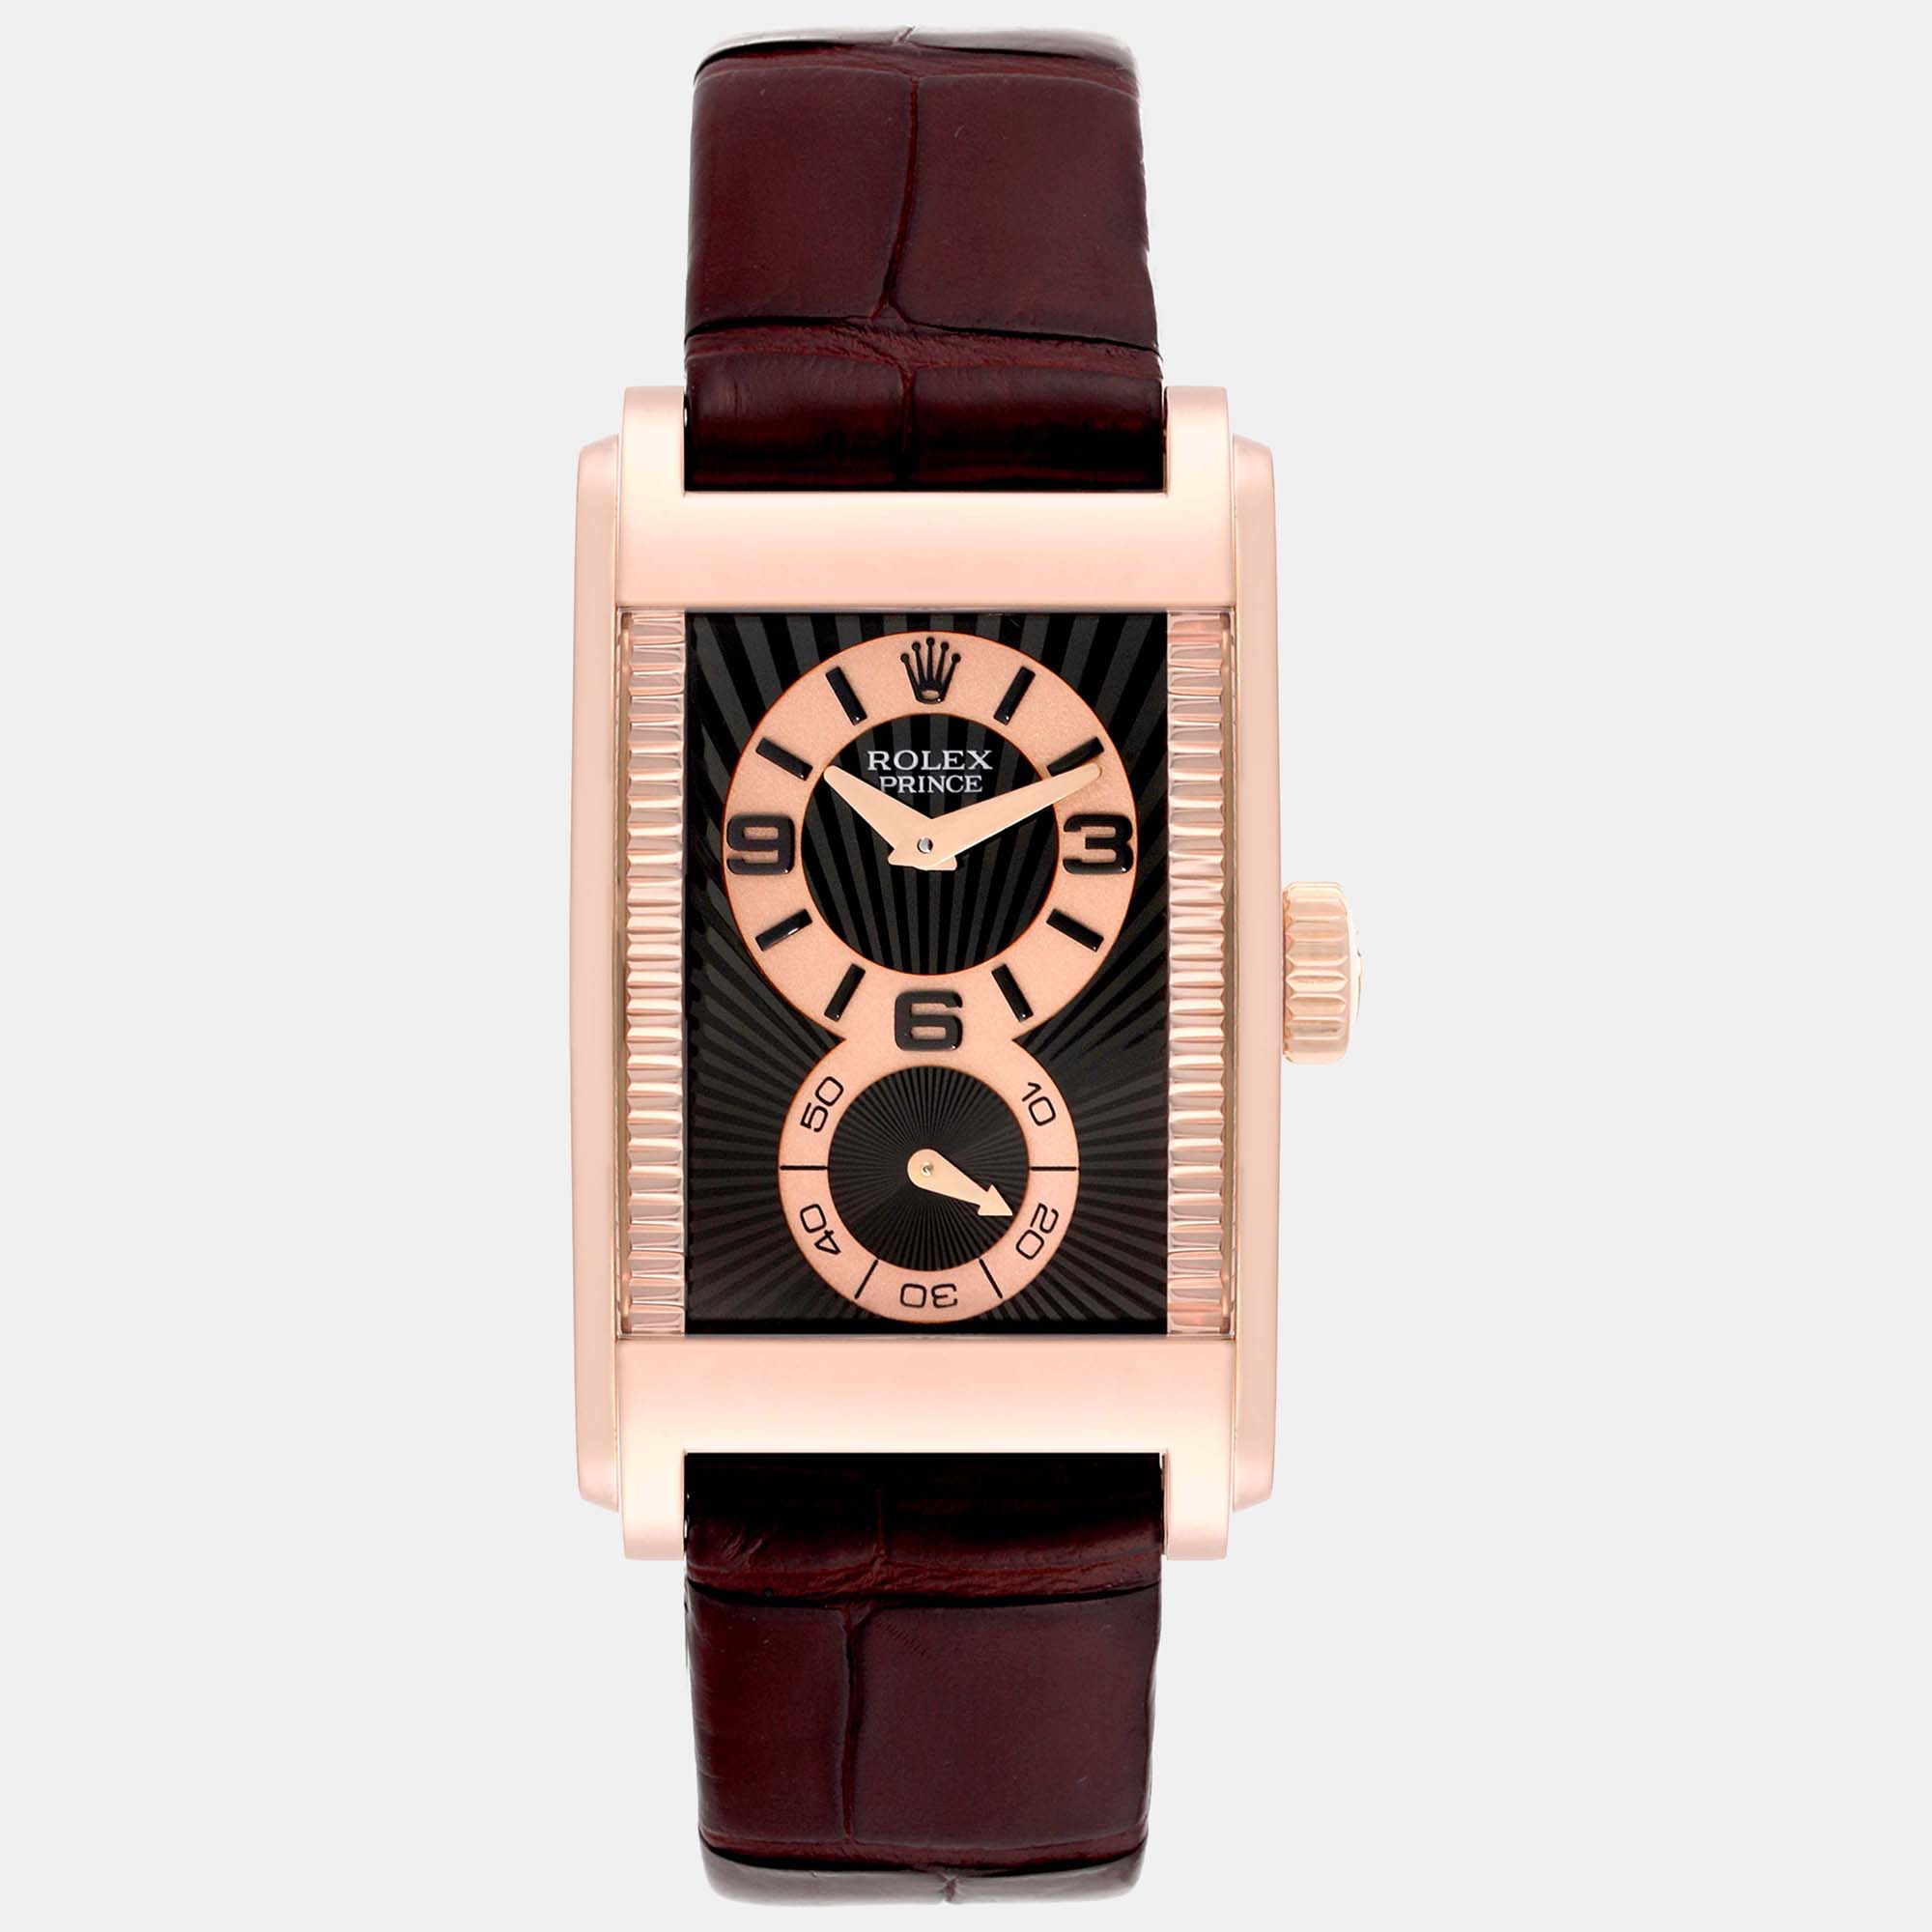 Rolex cellini prince rose gold black dial men's watch 5442 28 x 47 mm